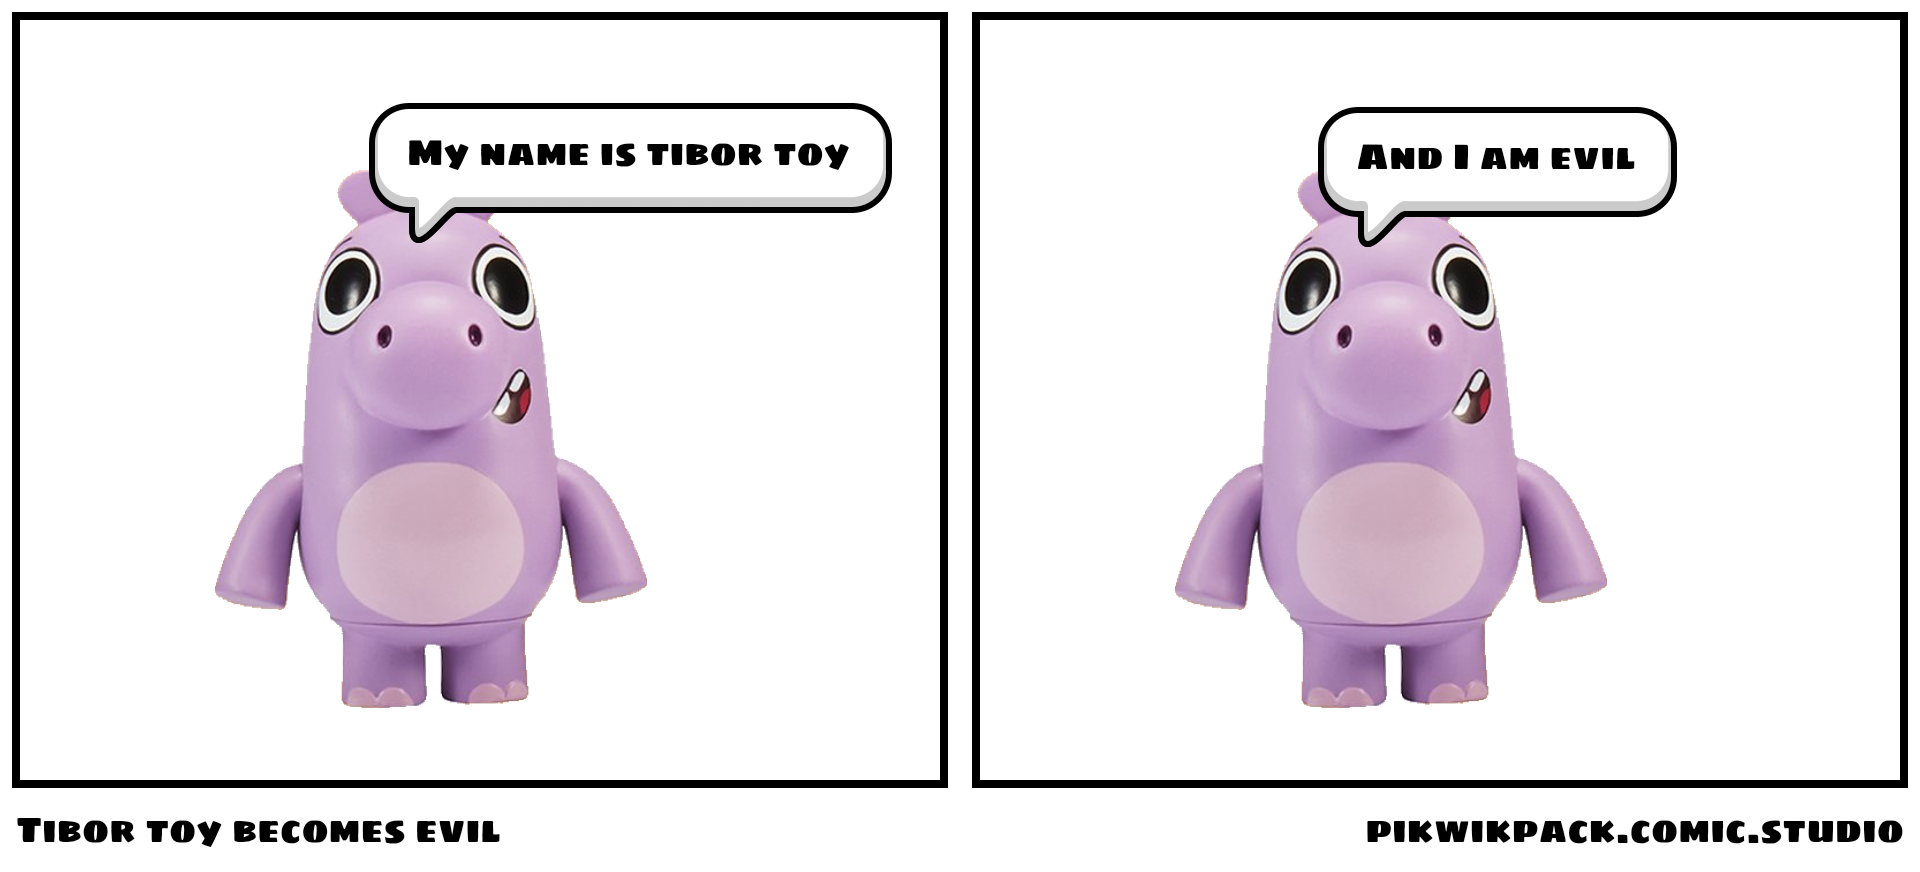 Tibor toy becomes evil